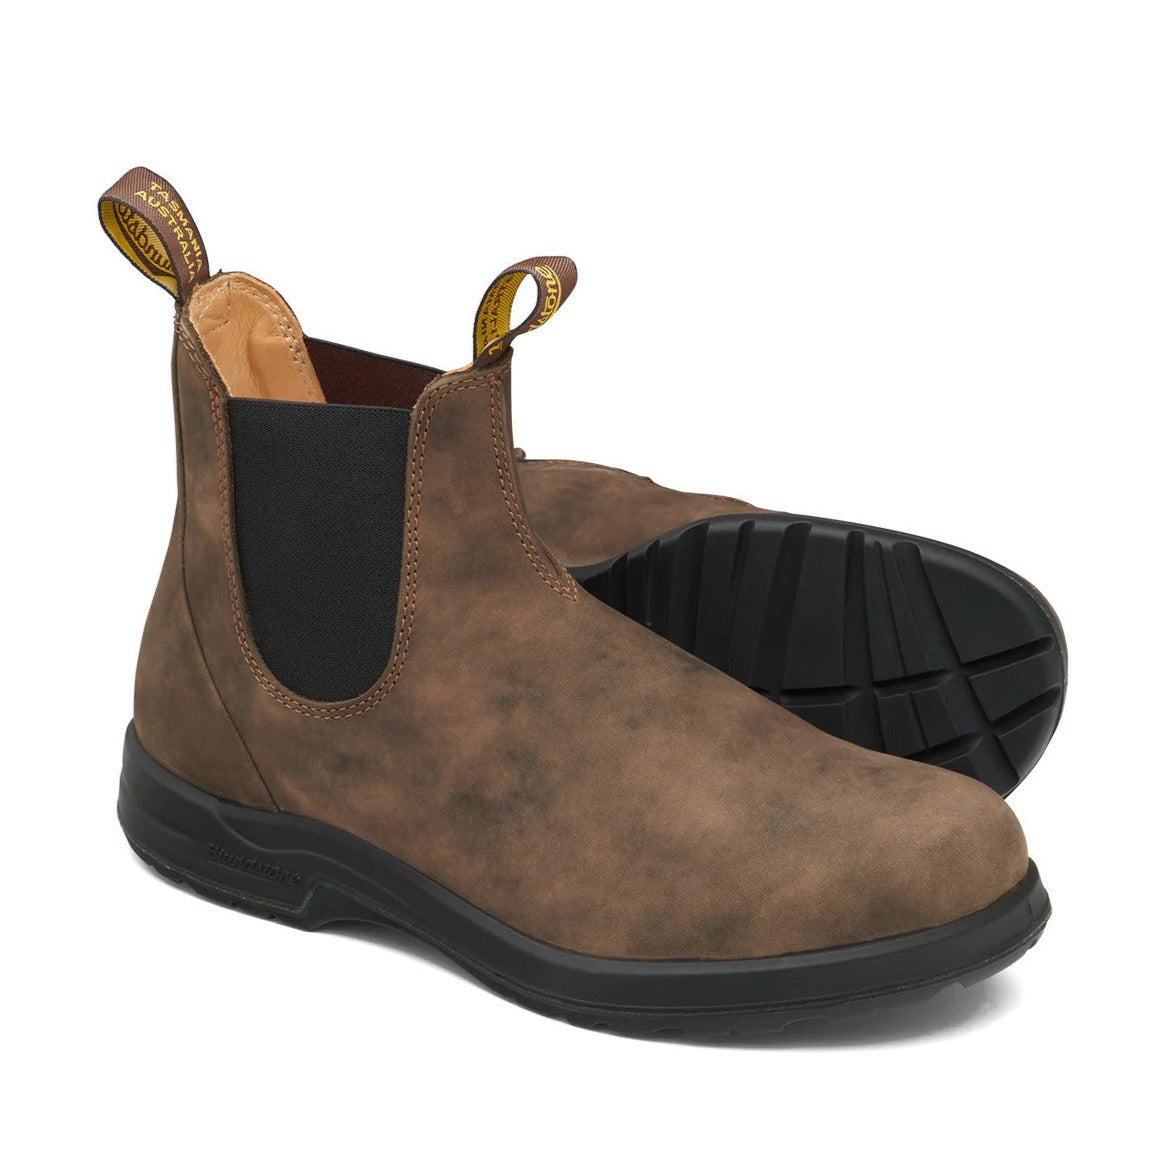 Blundstone #2056 All Terrain boot rustic brown pair